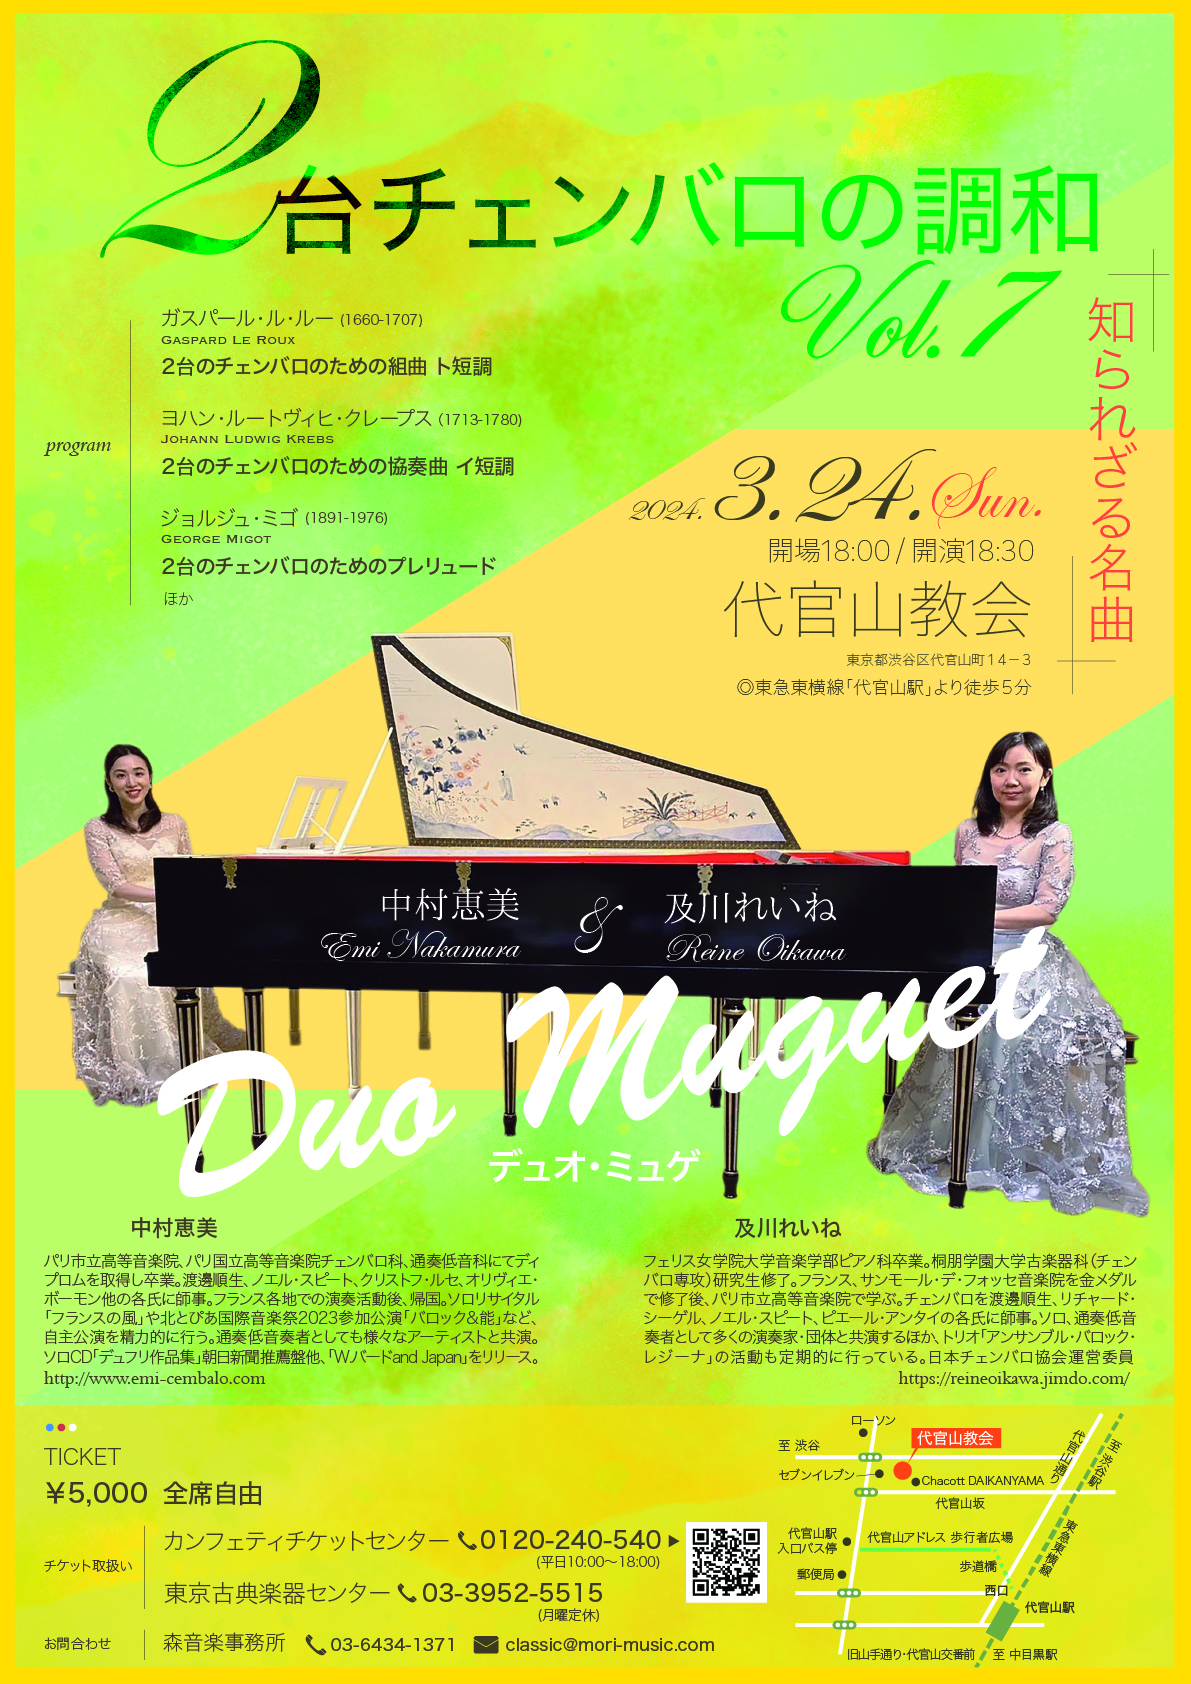 Duo Muguet Harmony of 2 Harpsichords Vol.7